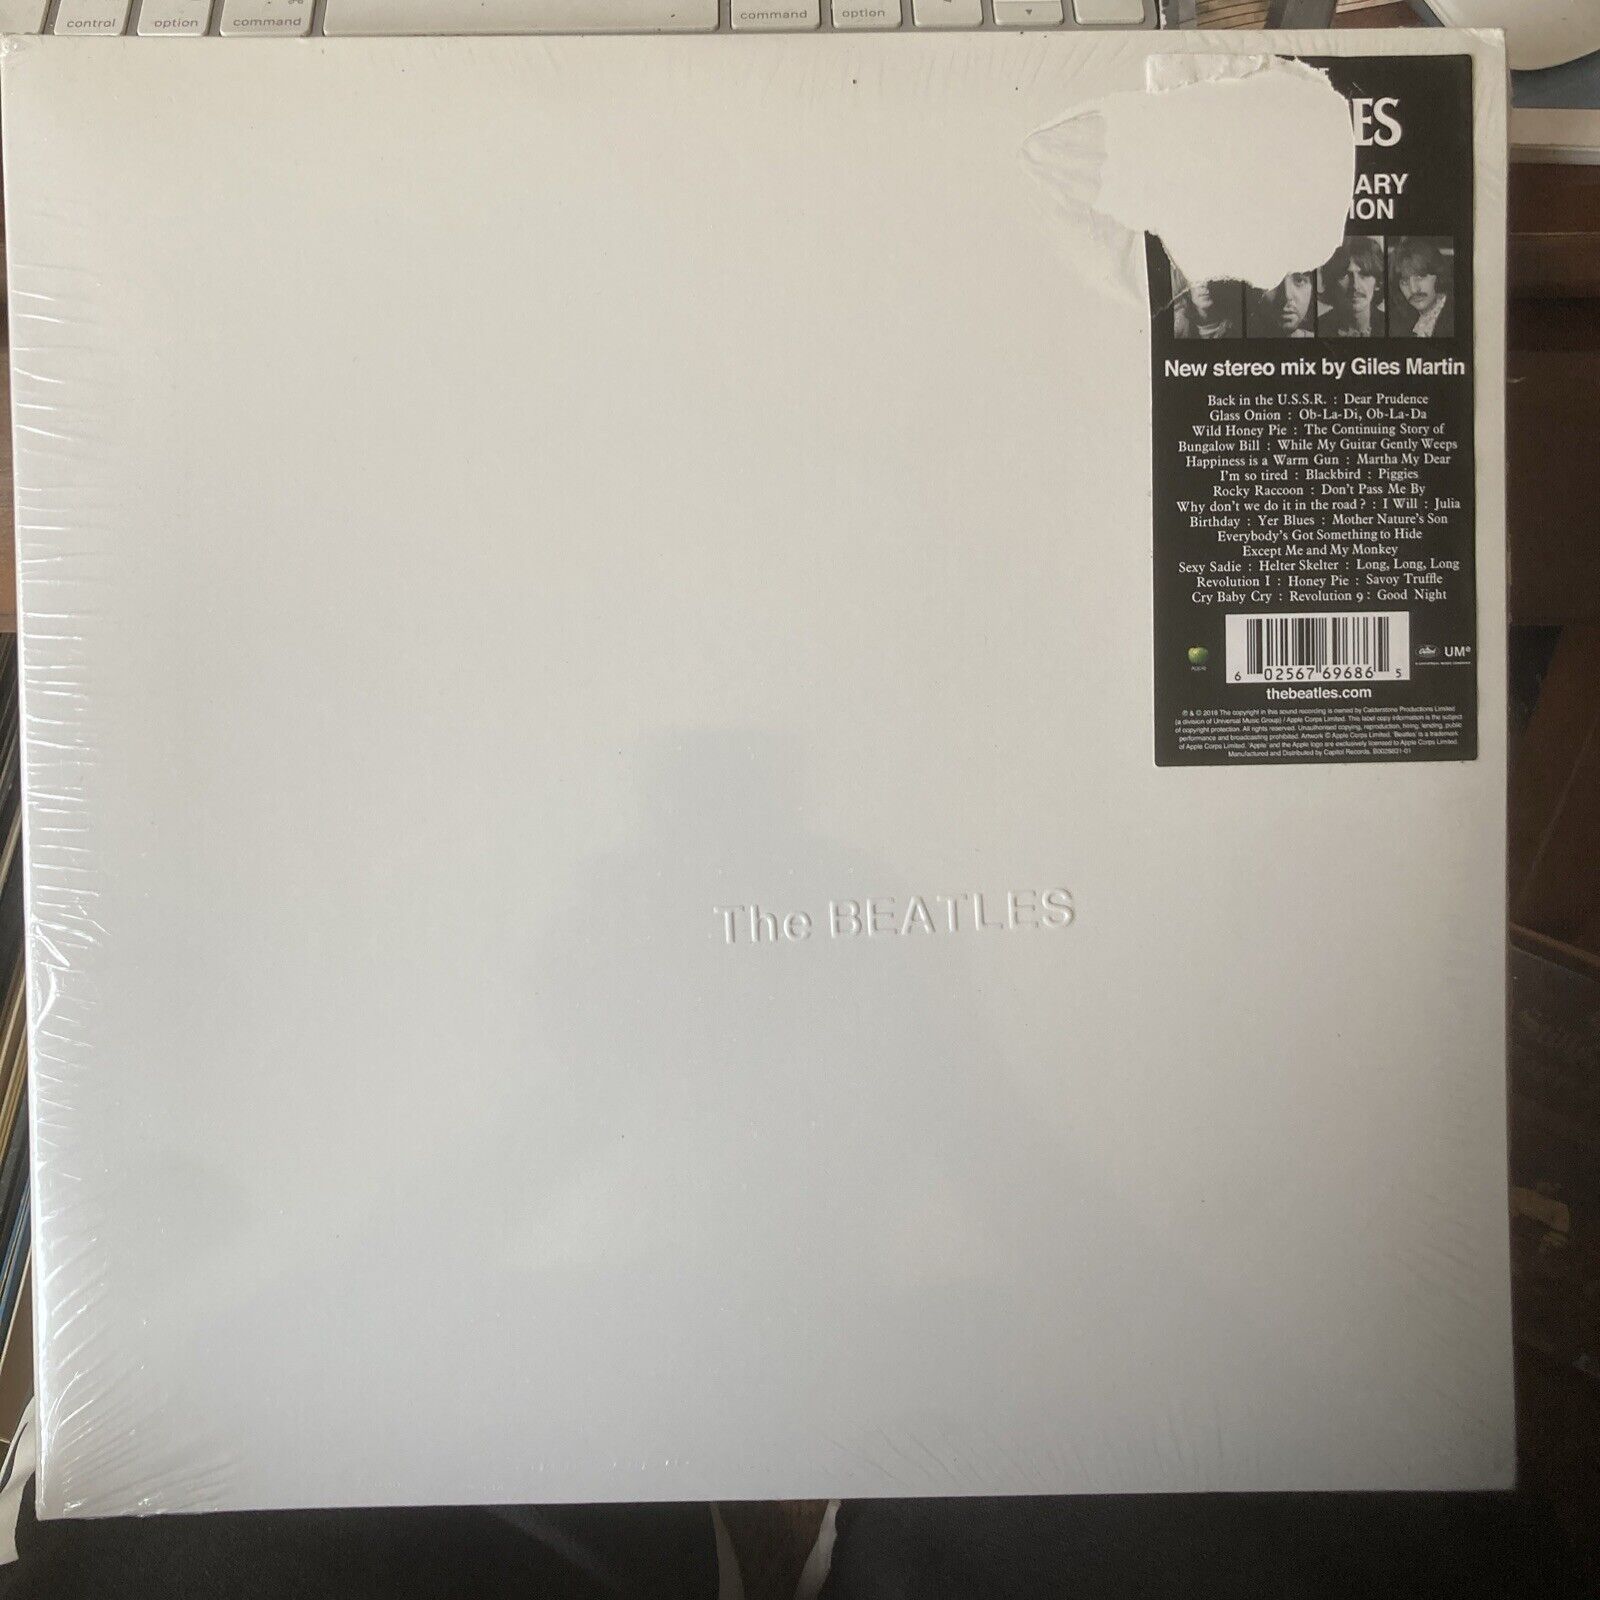 THE BEATLES WHITE ALBUM LP NEW SEALED APPLE NEW STEREO MIX GILES MARTIN 2018 LP